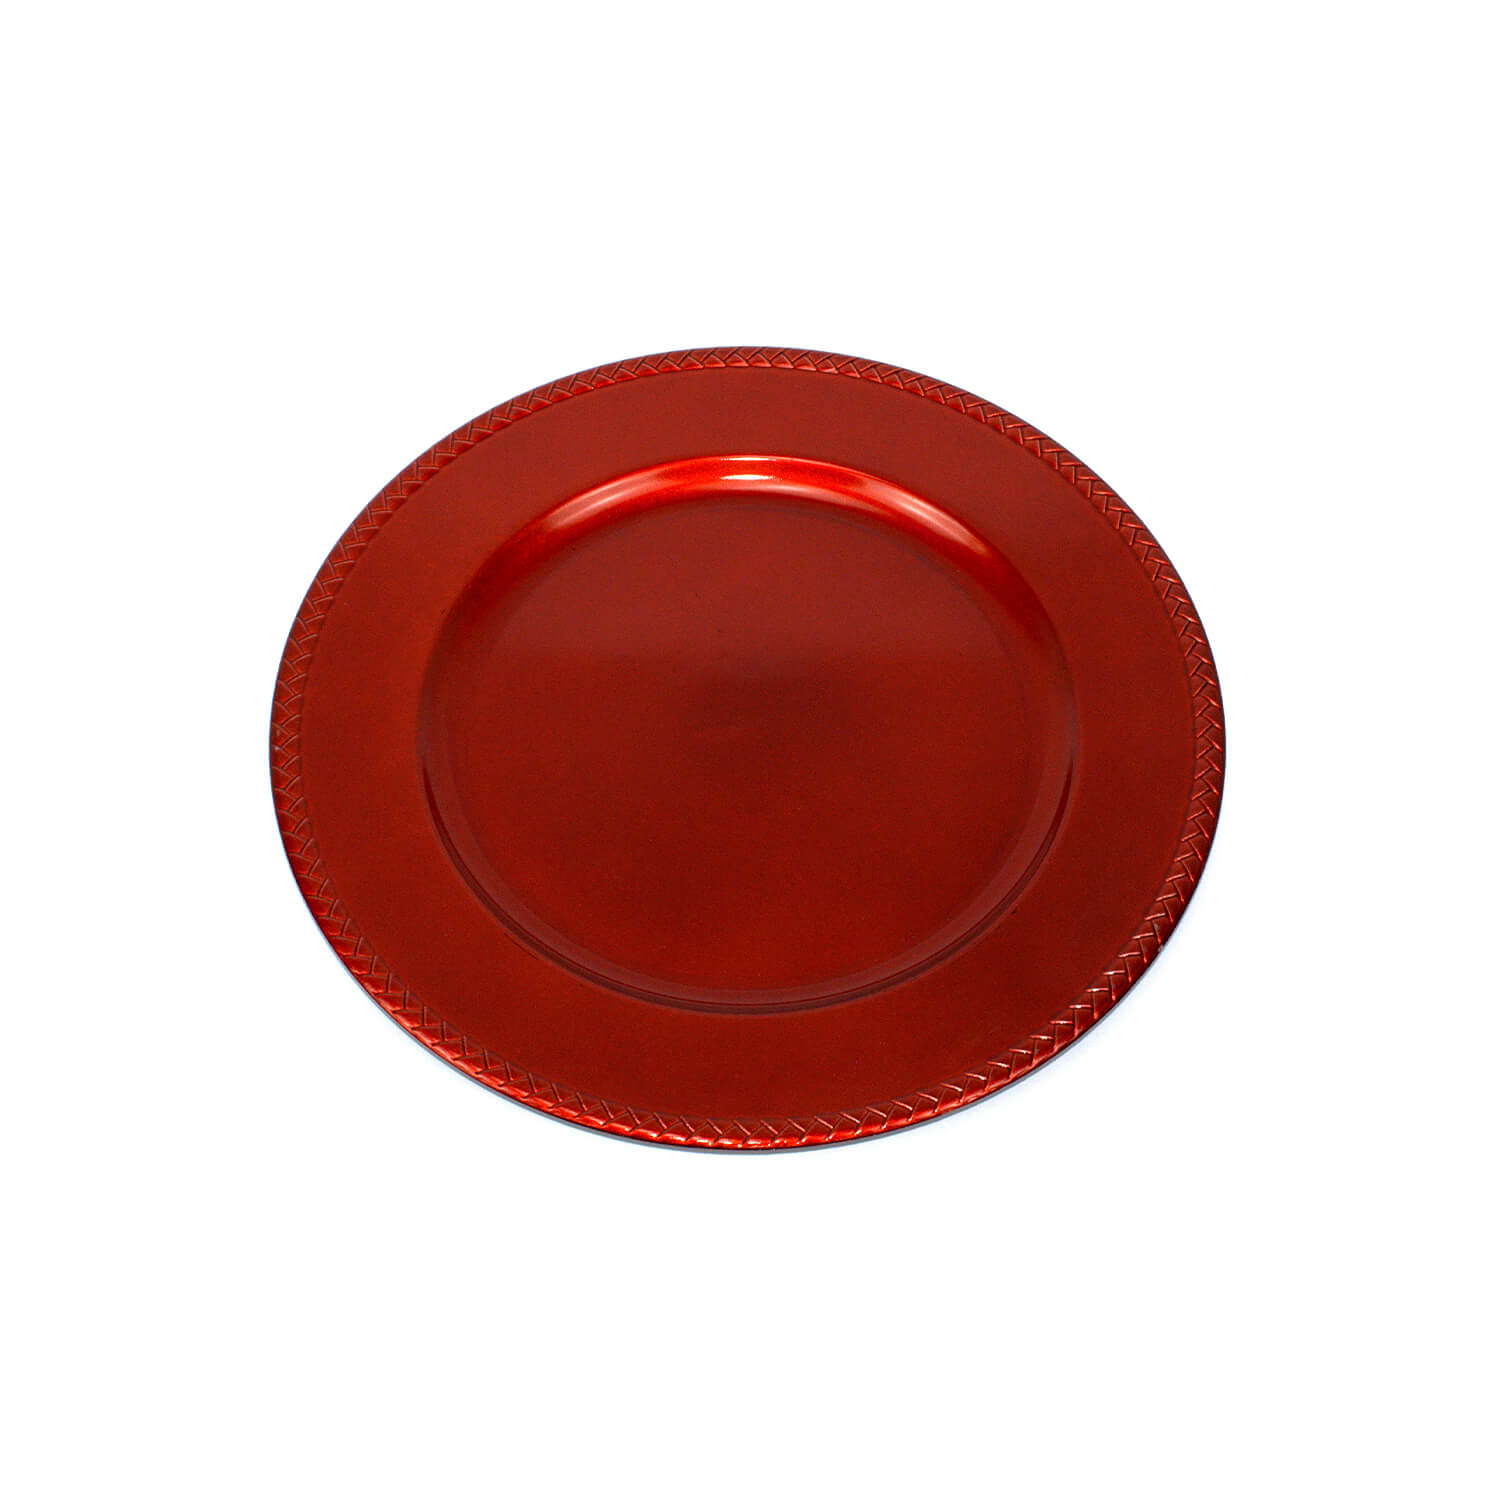 Descanso Prato Plástico Souplast Vermelho 33cm GBX (1)